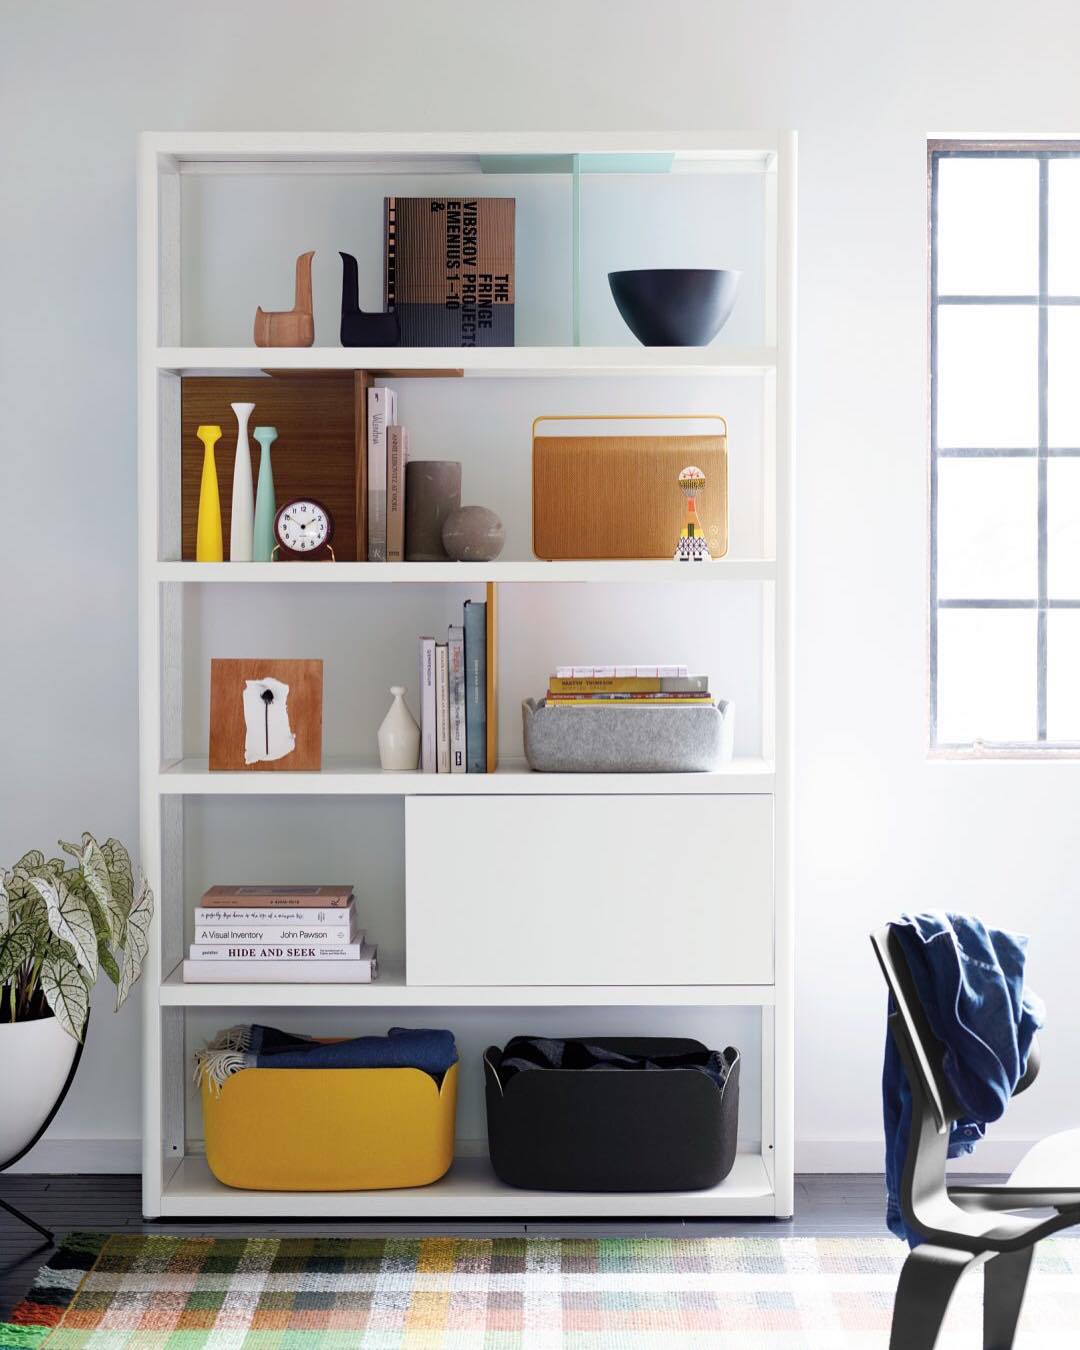 https://www.extraspace.com/blog/wp-content/uploads/2018/02/Living-Room-Organization-Install-Free-Standing-Shelves.jpg